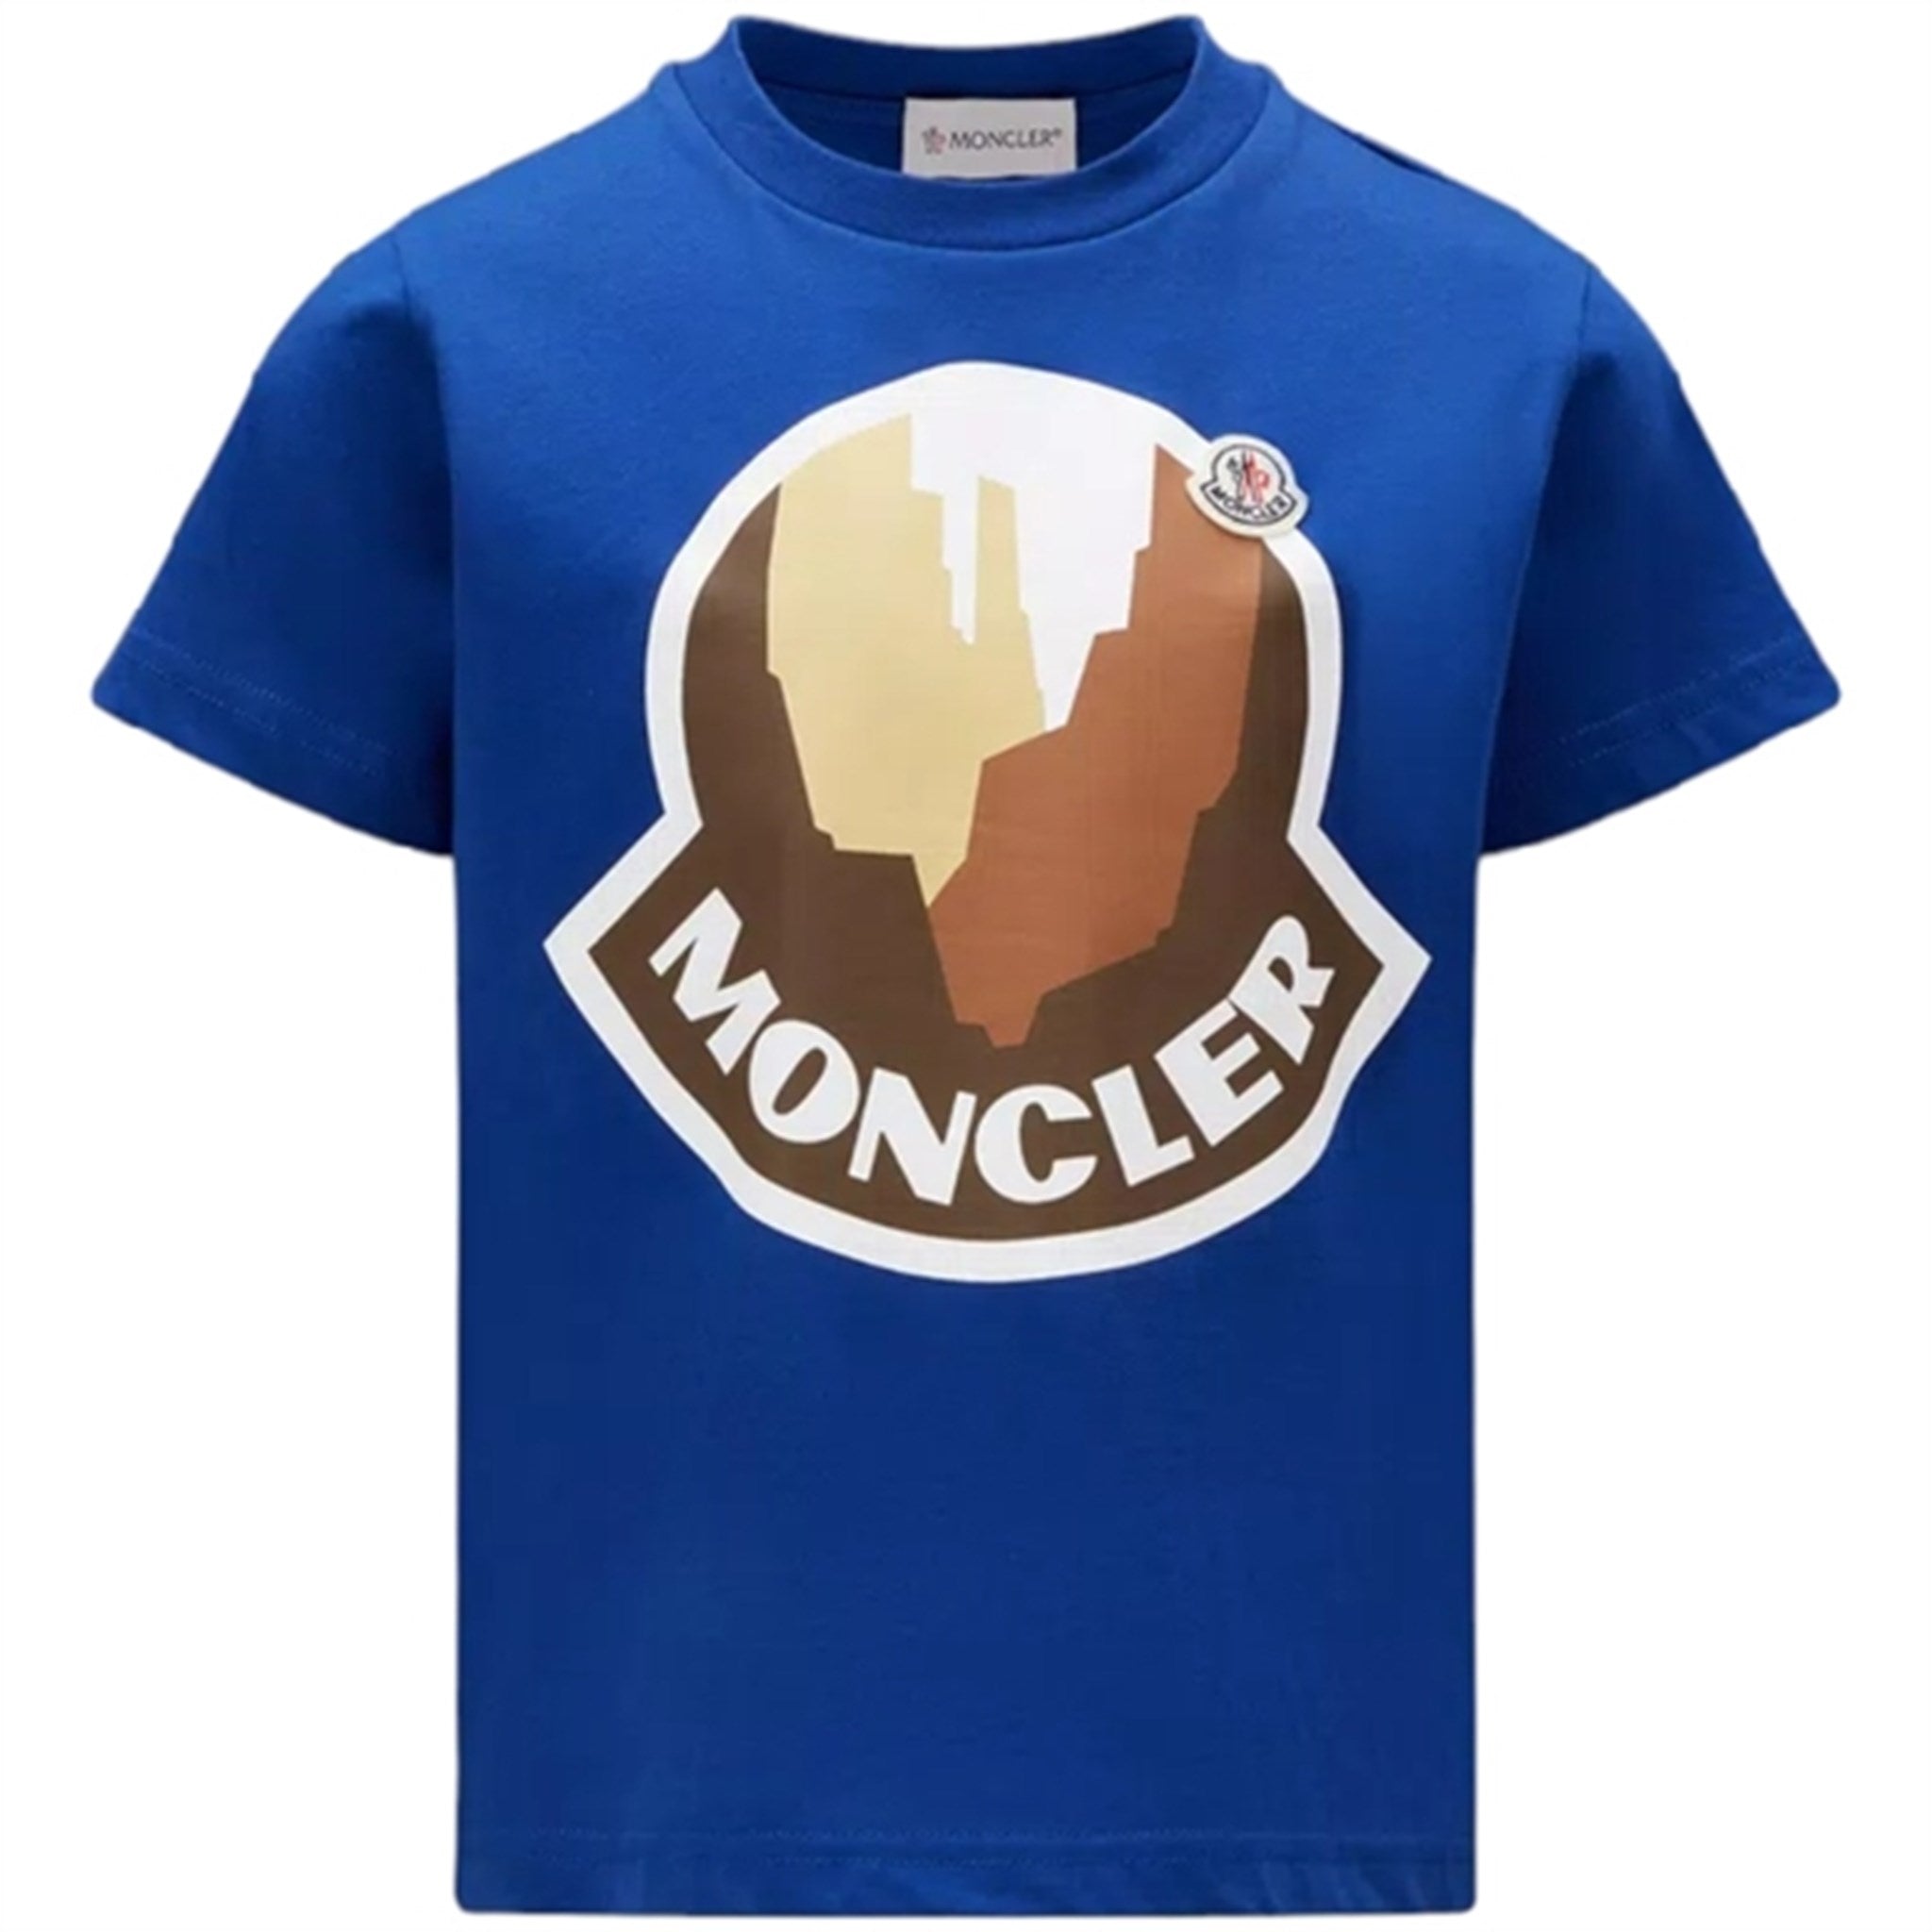 Moncler T-Shirt Royal Blue